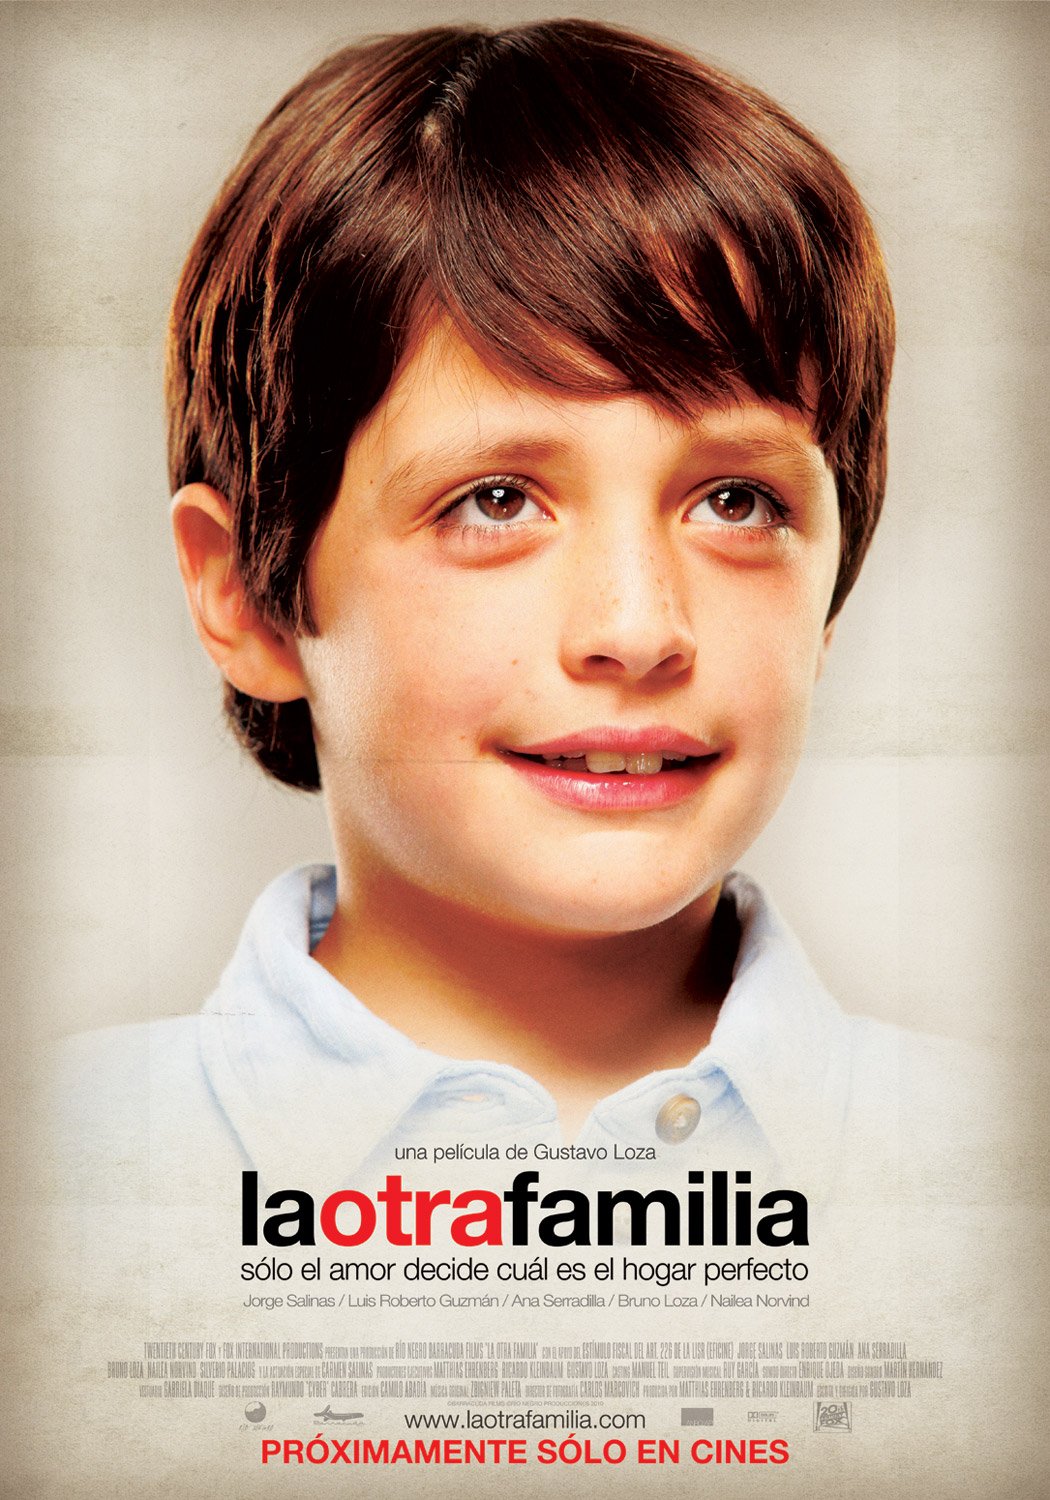 Extra Large Movie Poster Image for La otra familia (#5 of 5)